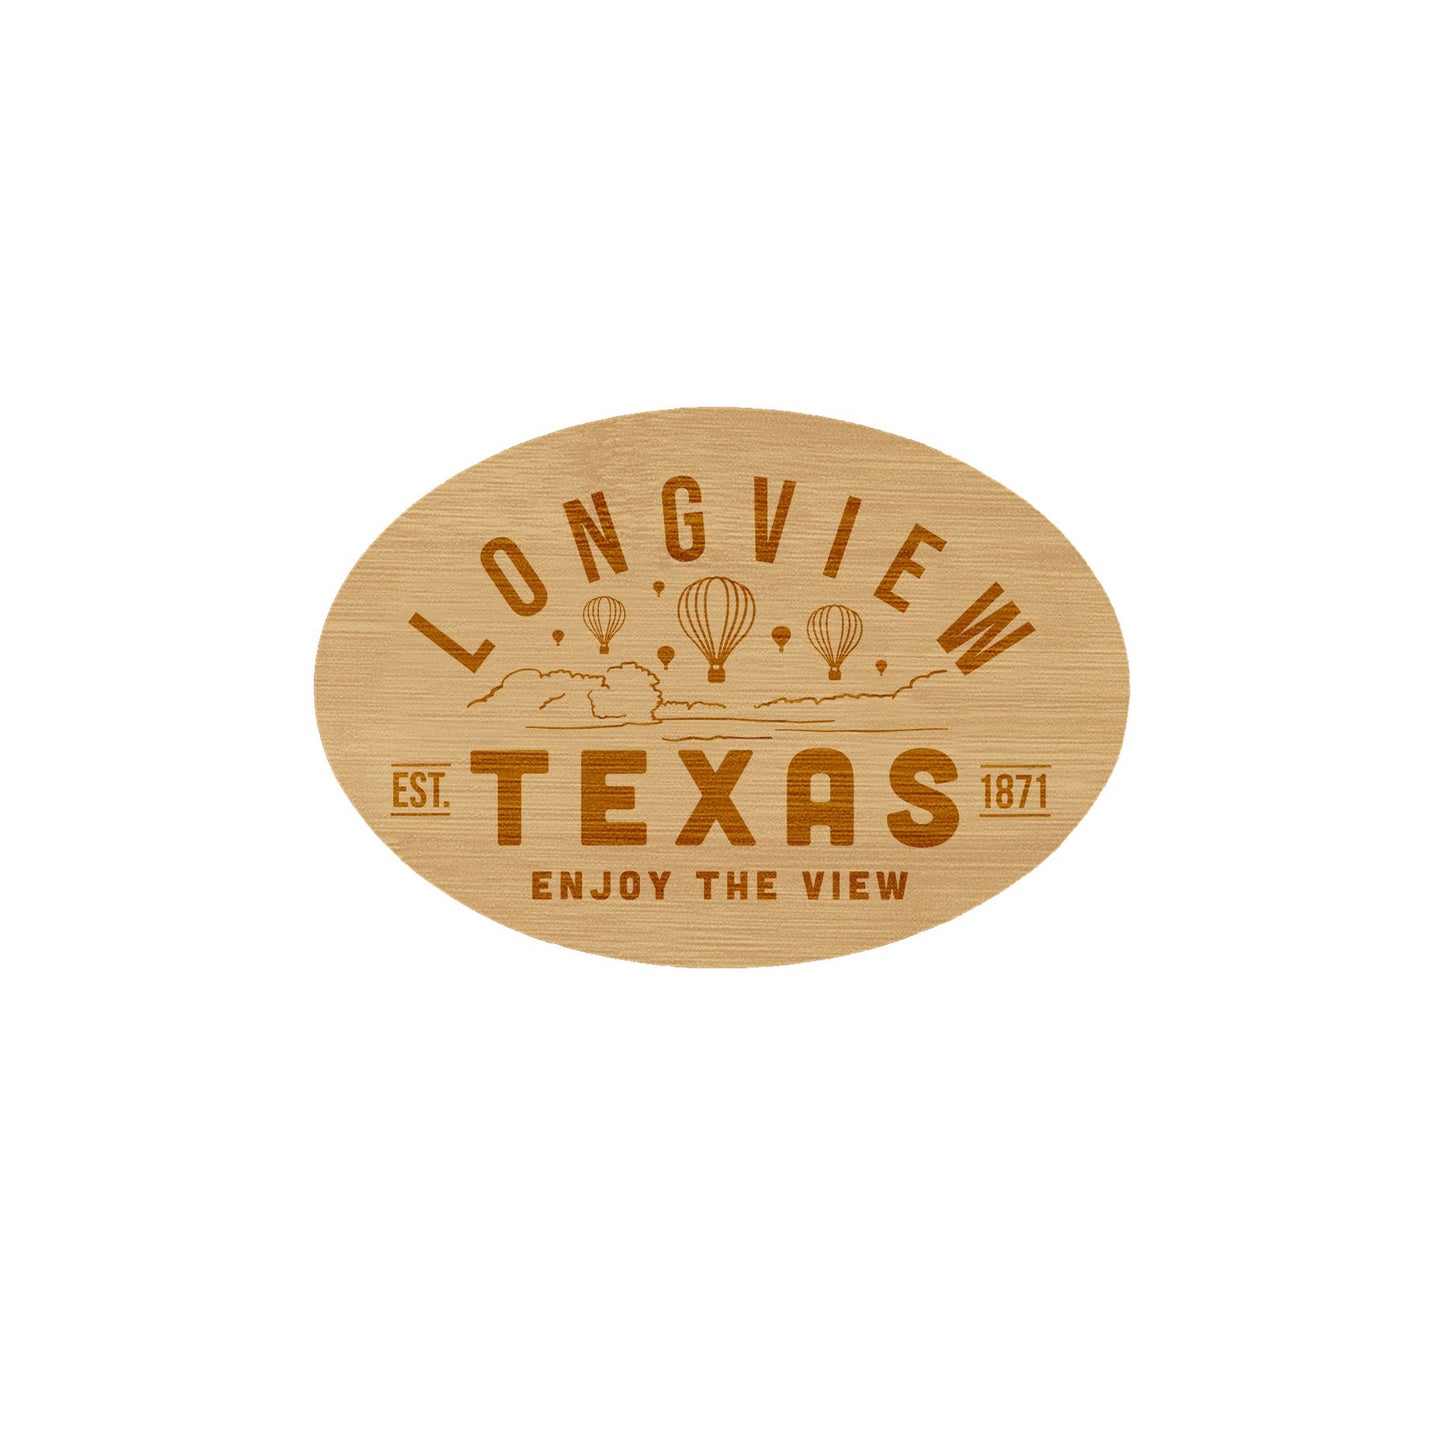 Longview Texas Wooden Magnet